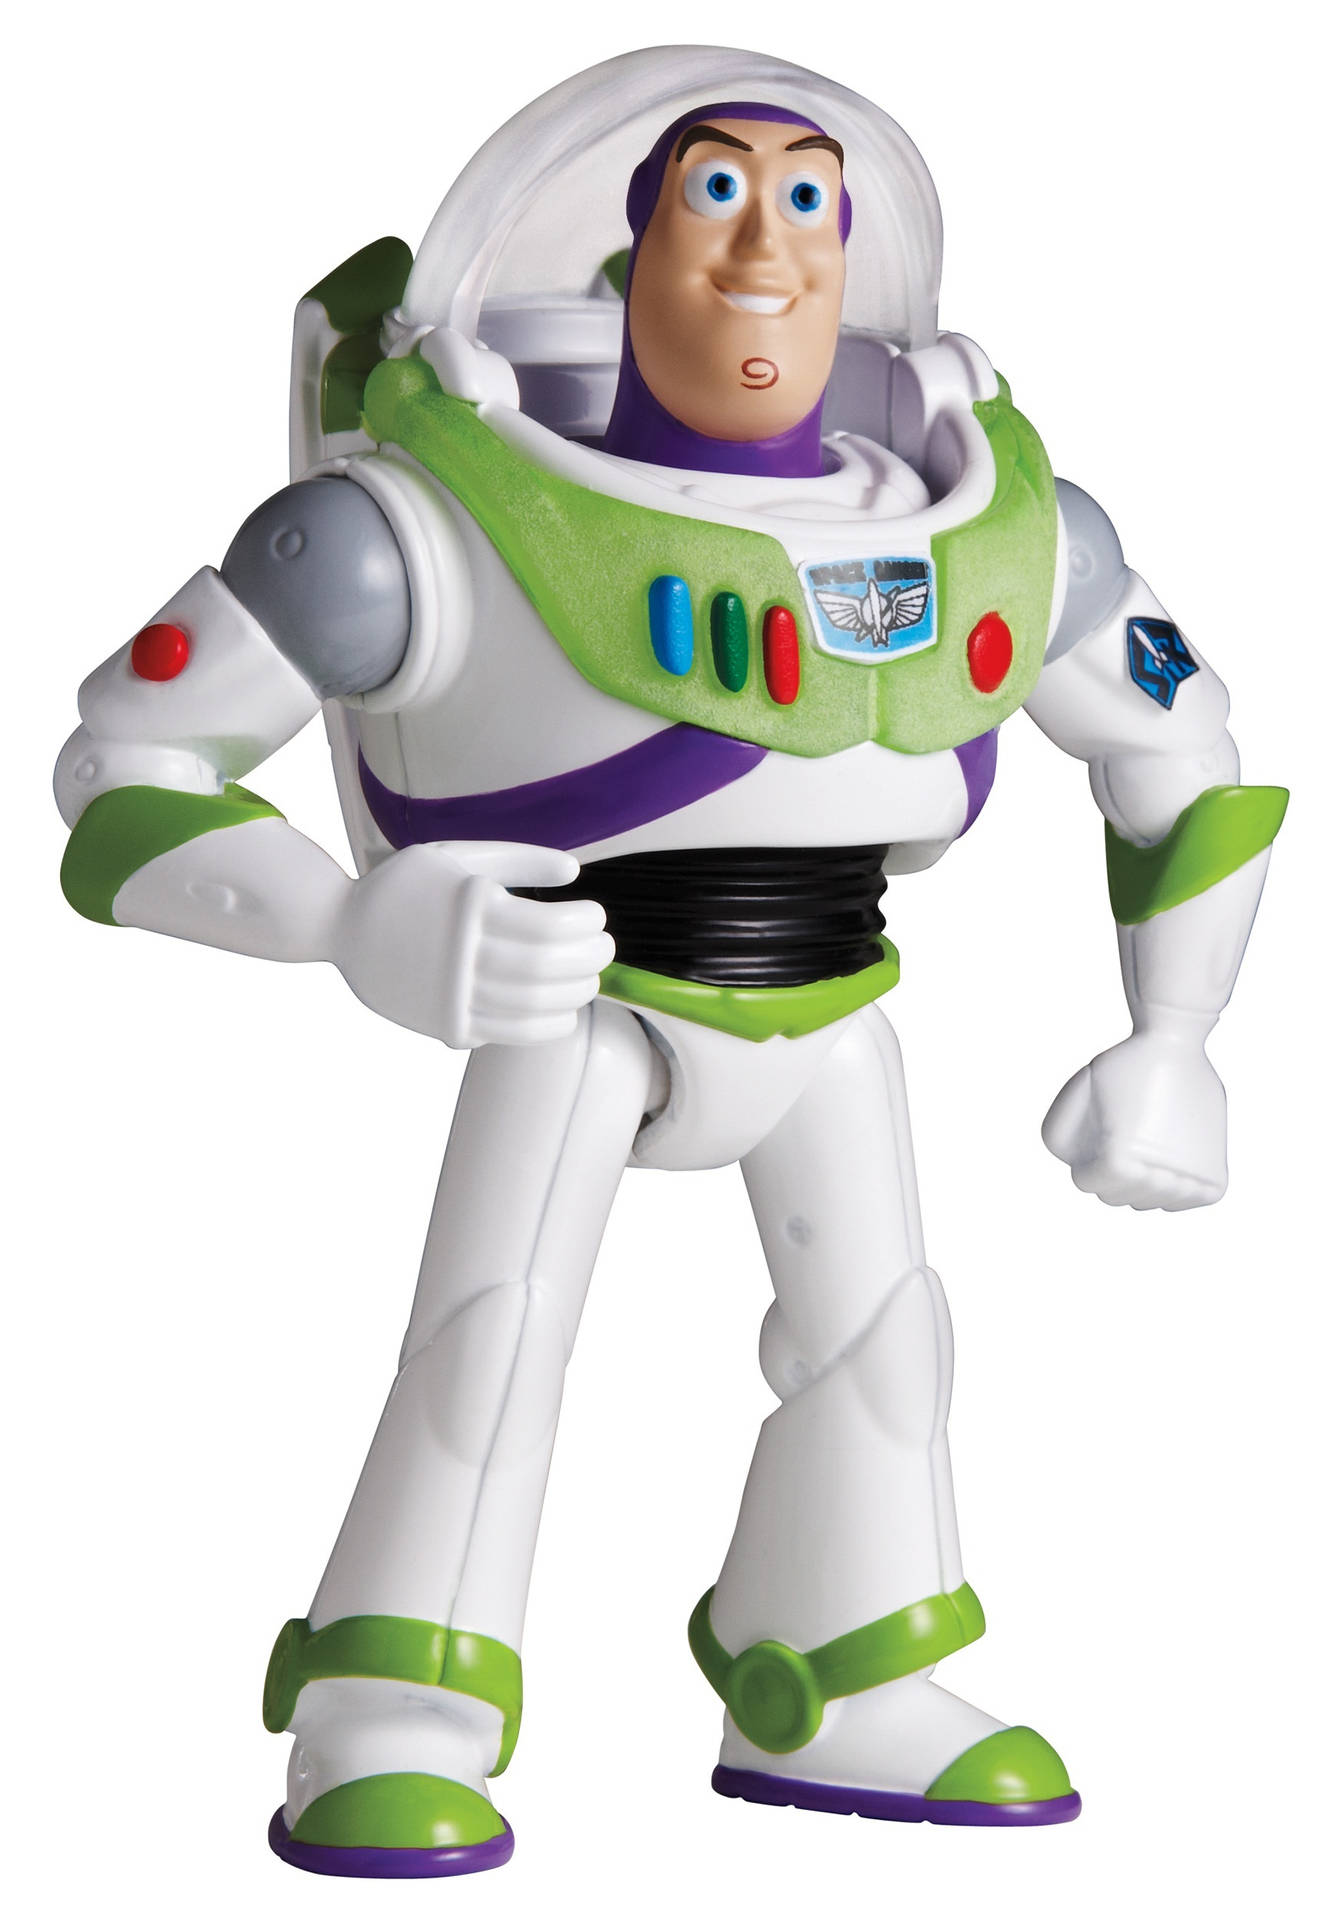 Cute Buzz Lightyear Toy Background